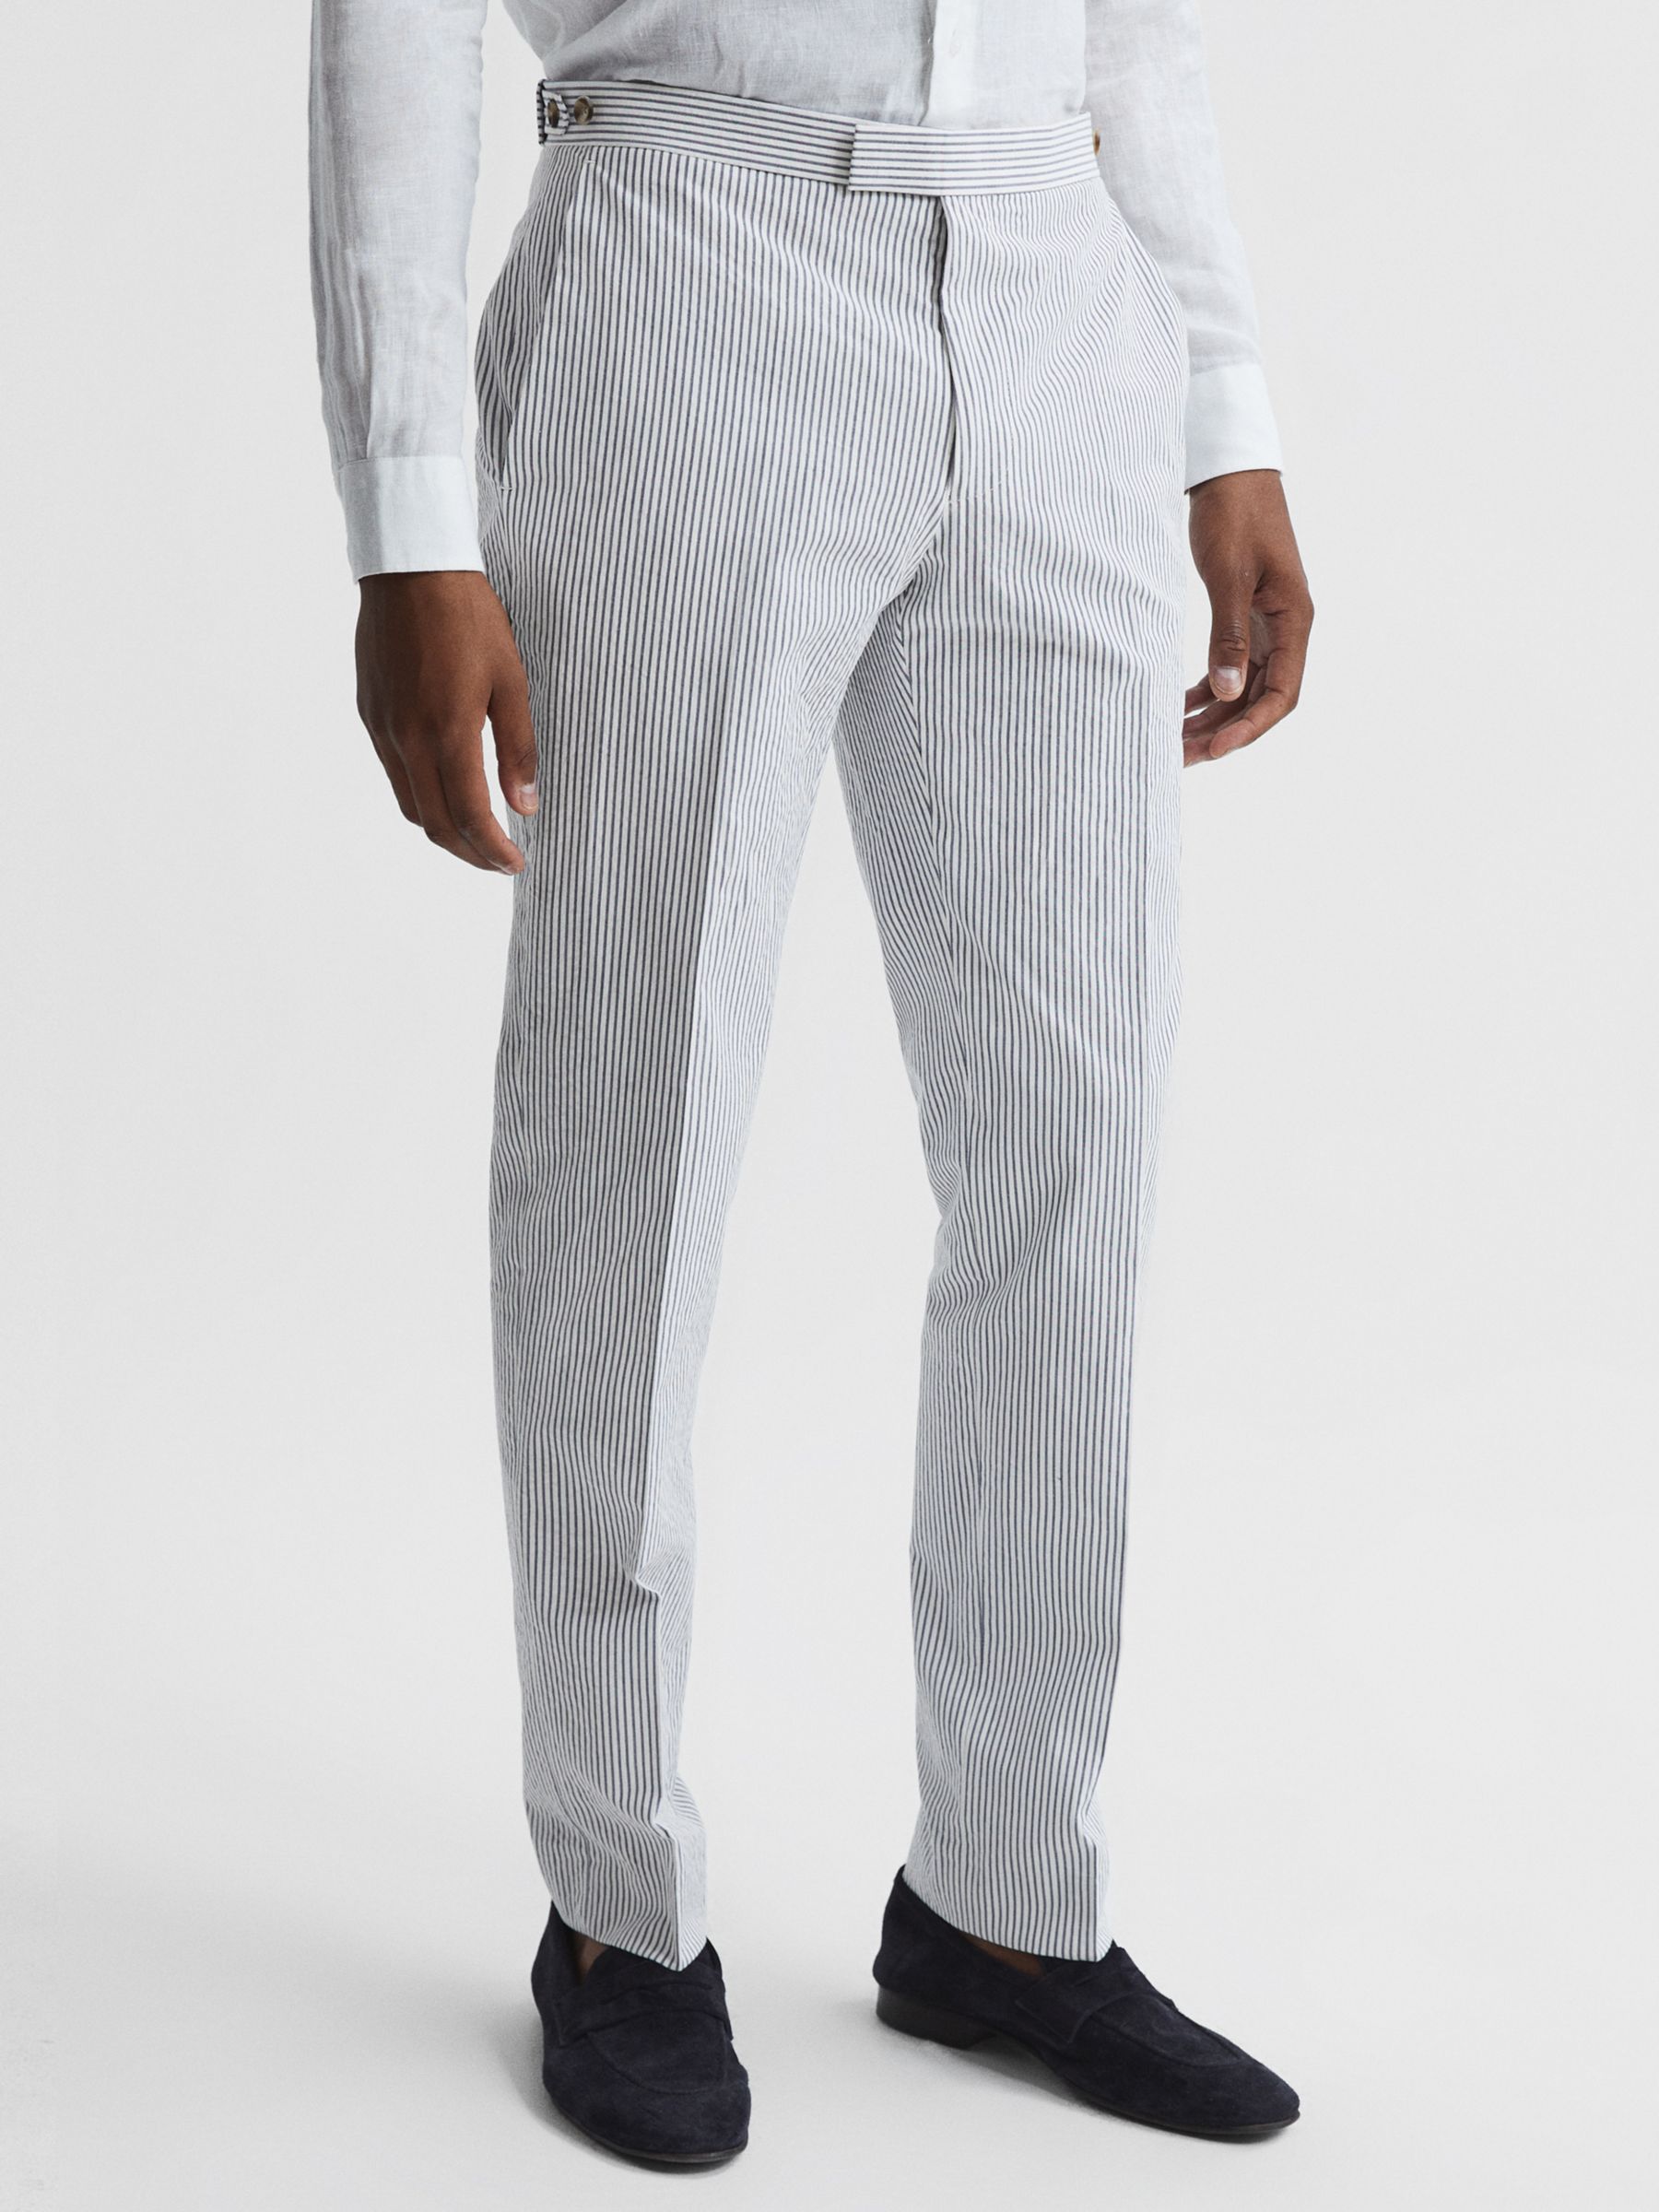 Reiss Barr Seersucker Suit Trousers, Blue/White at John Lewis & Partners